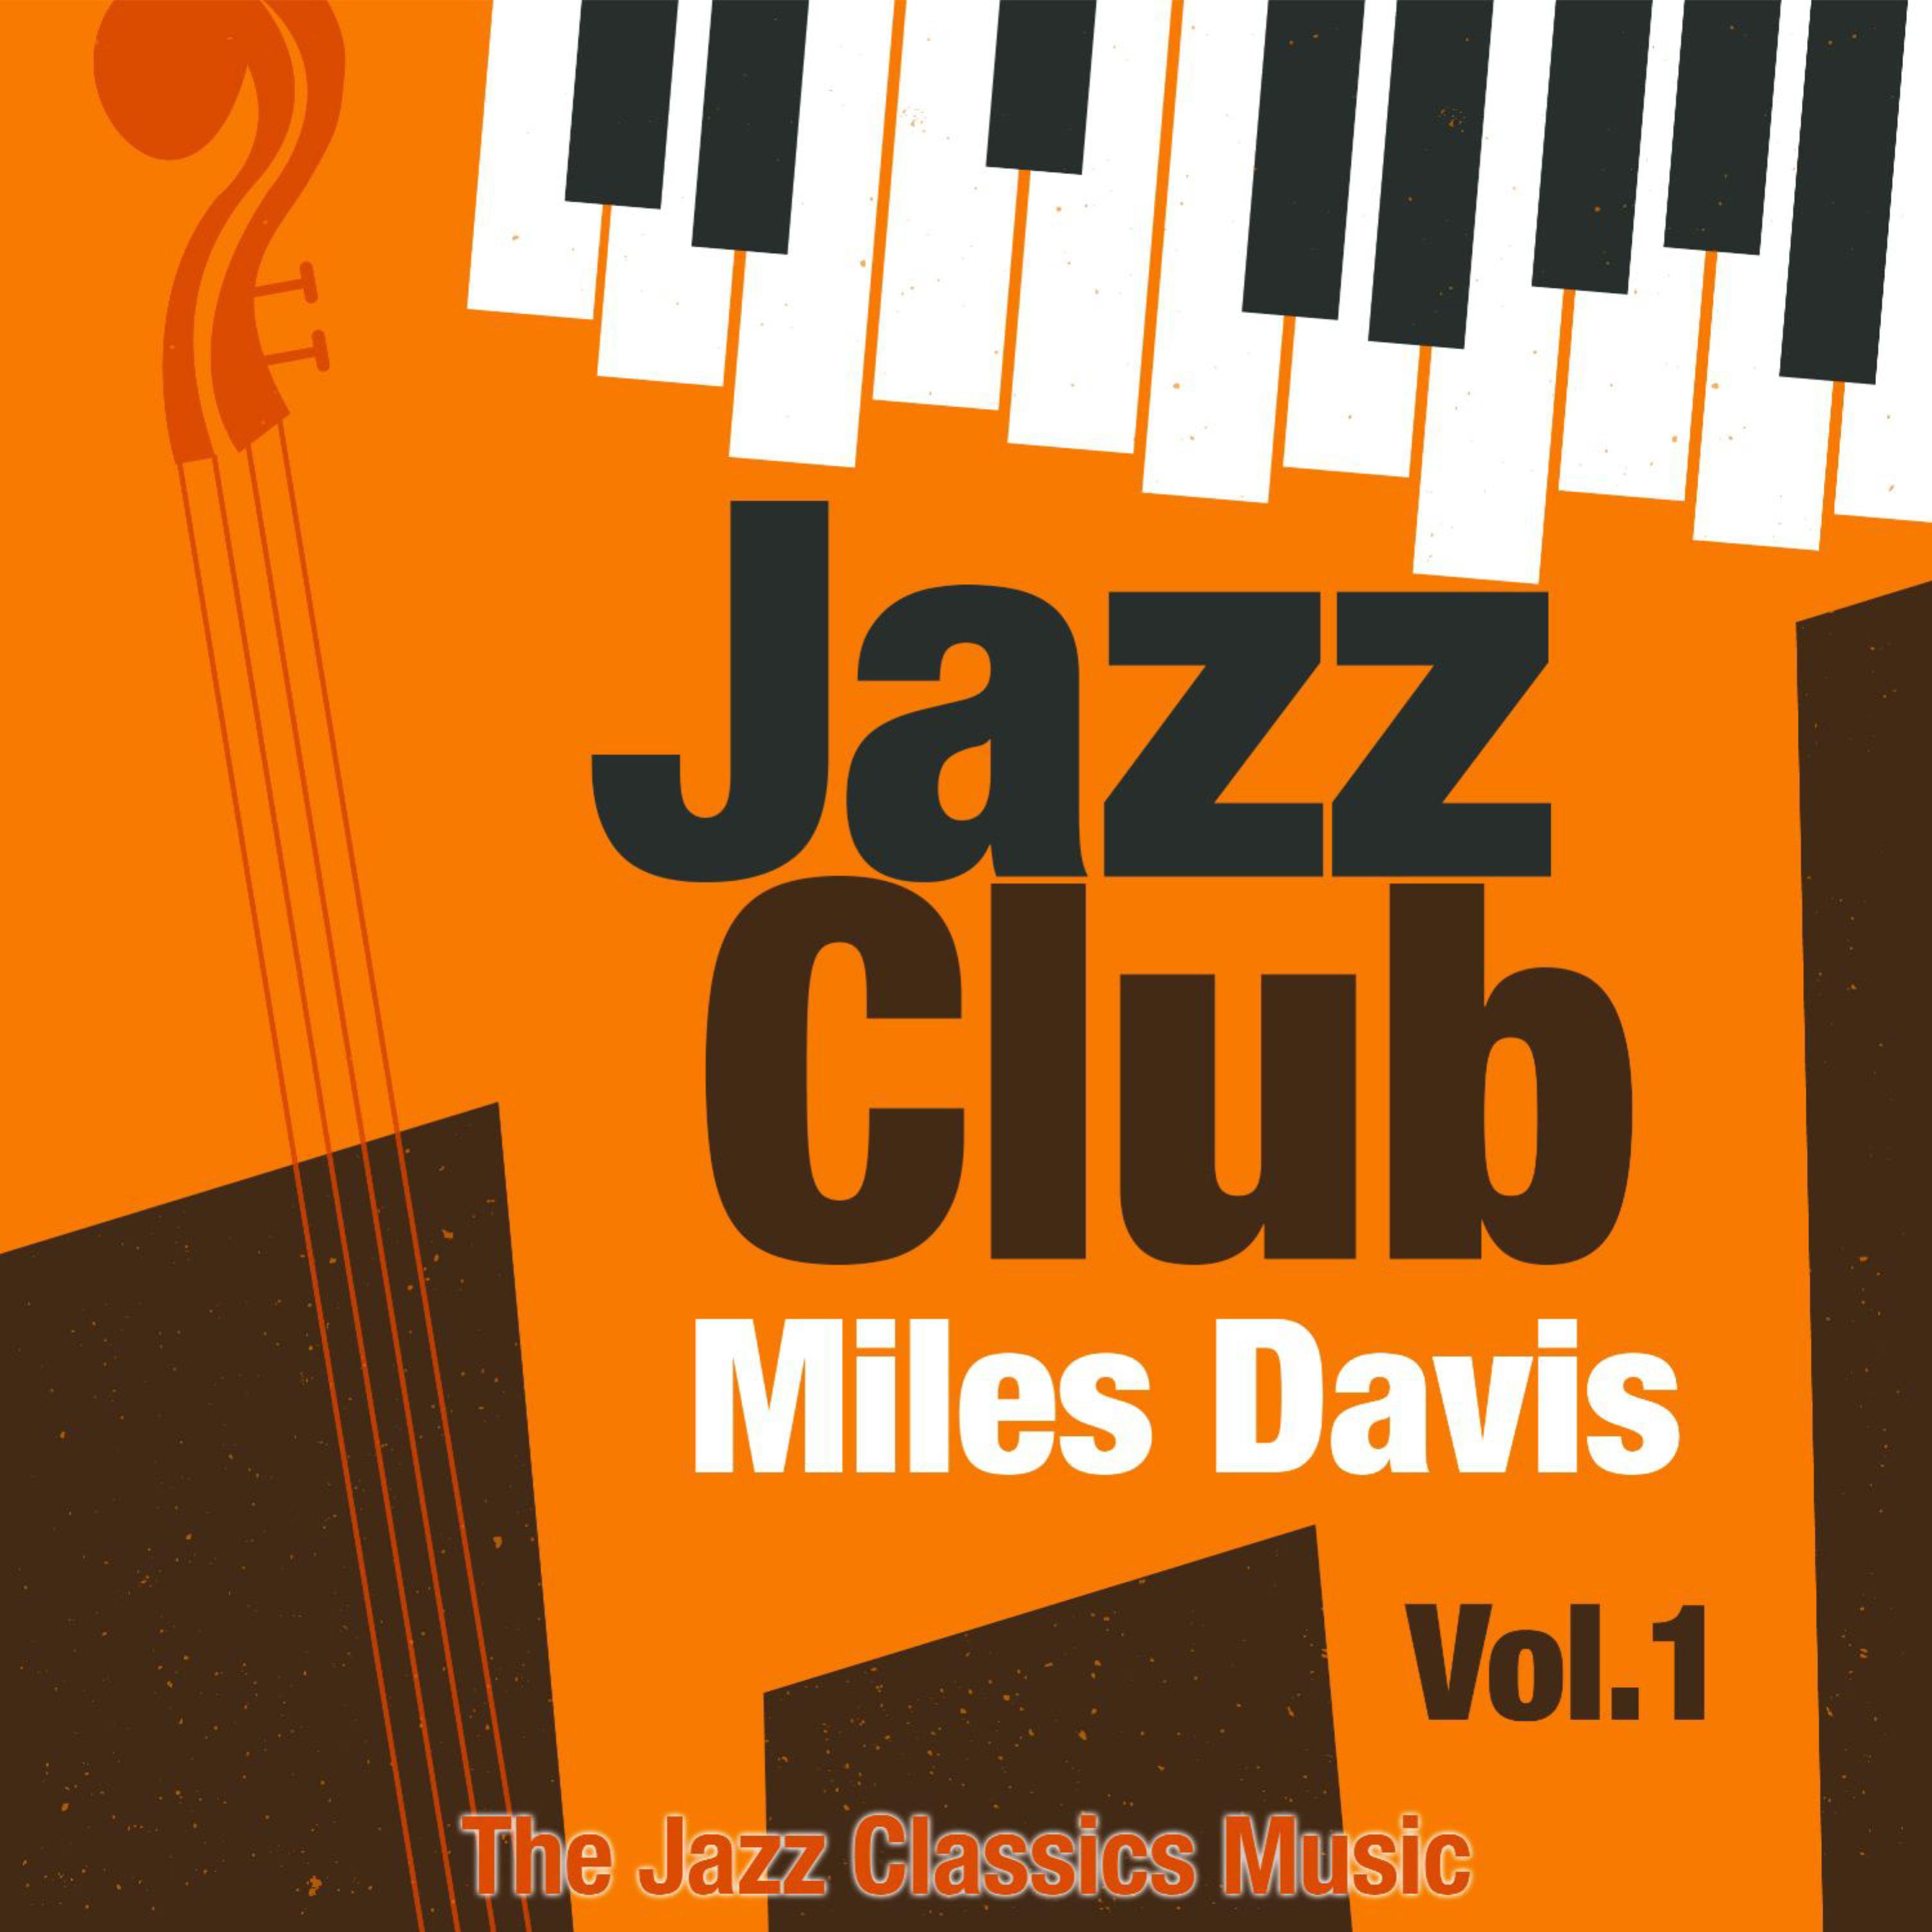 Jazz Club, Vol. 1专辑